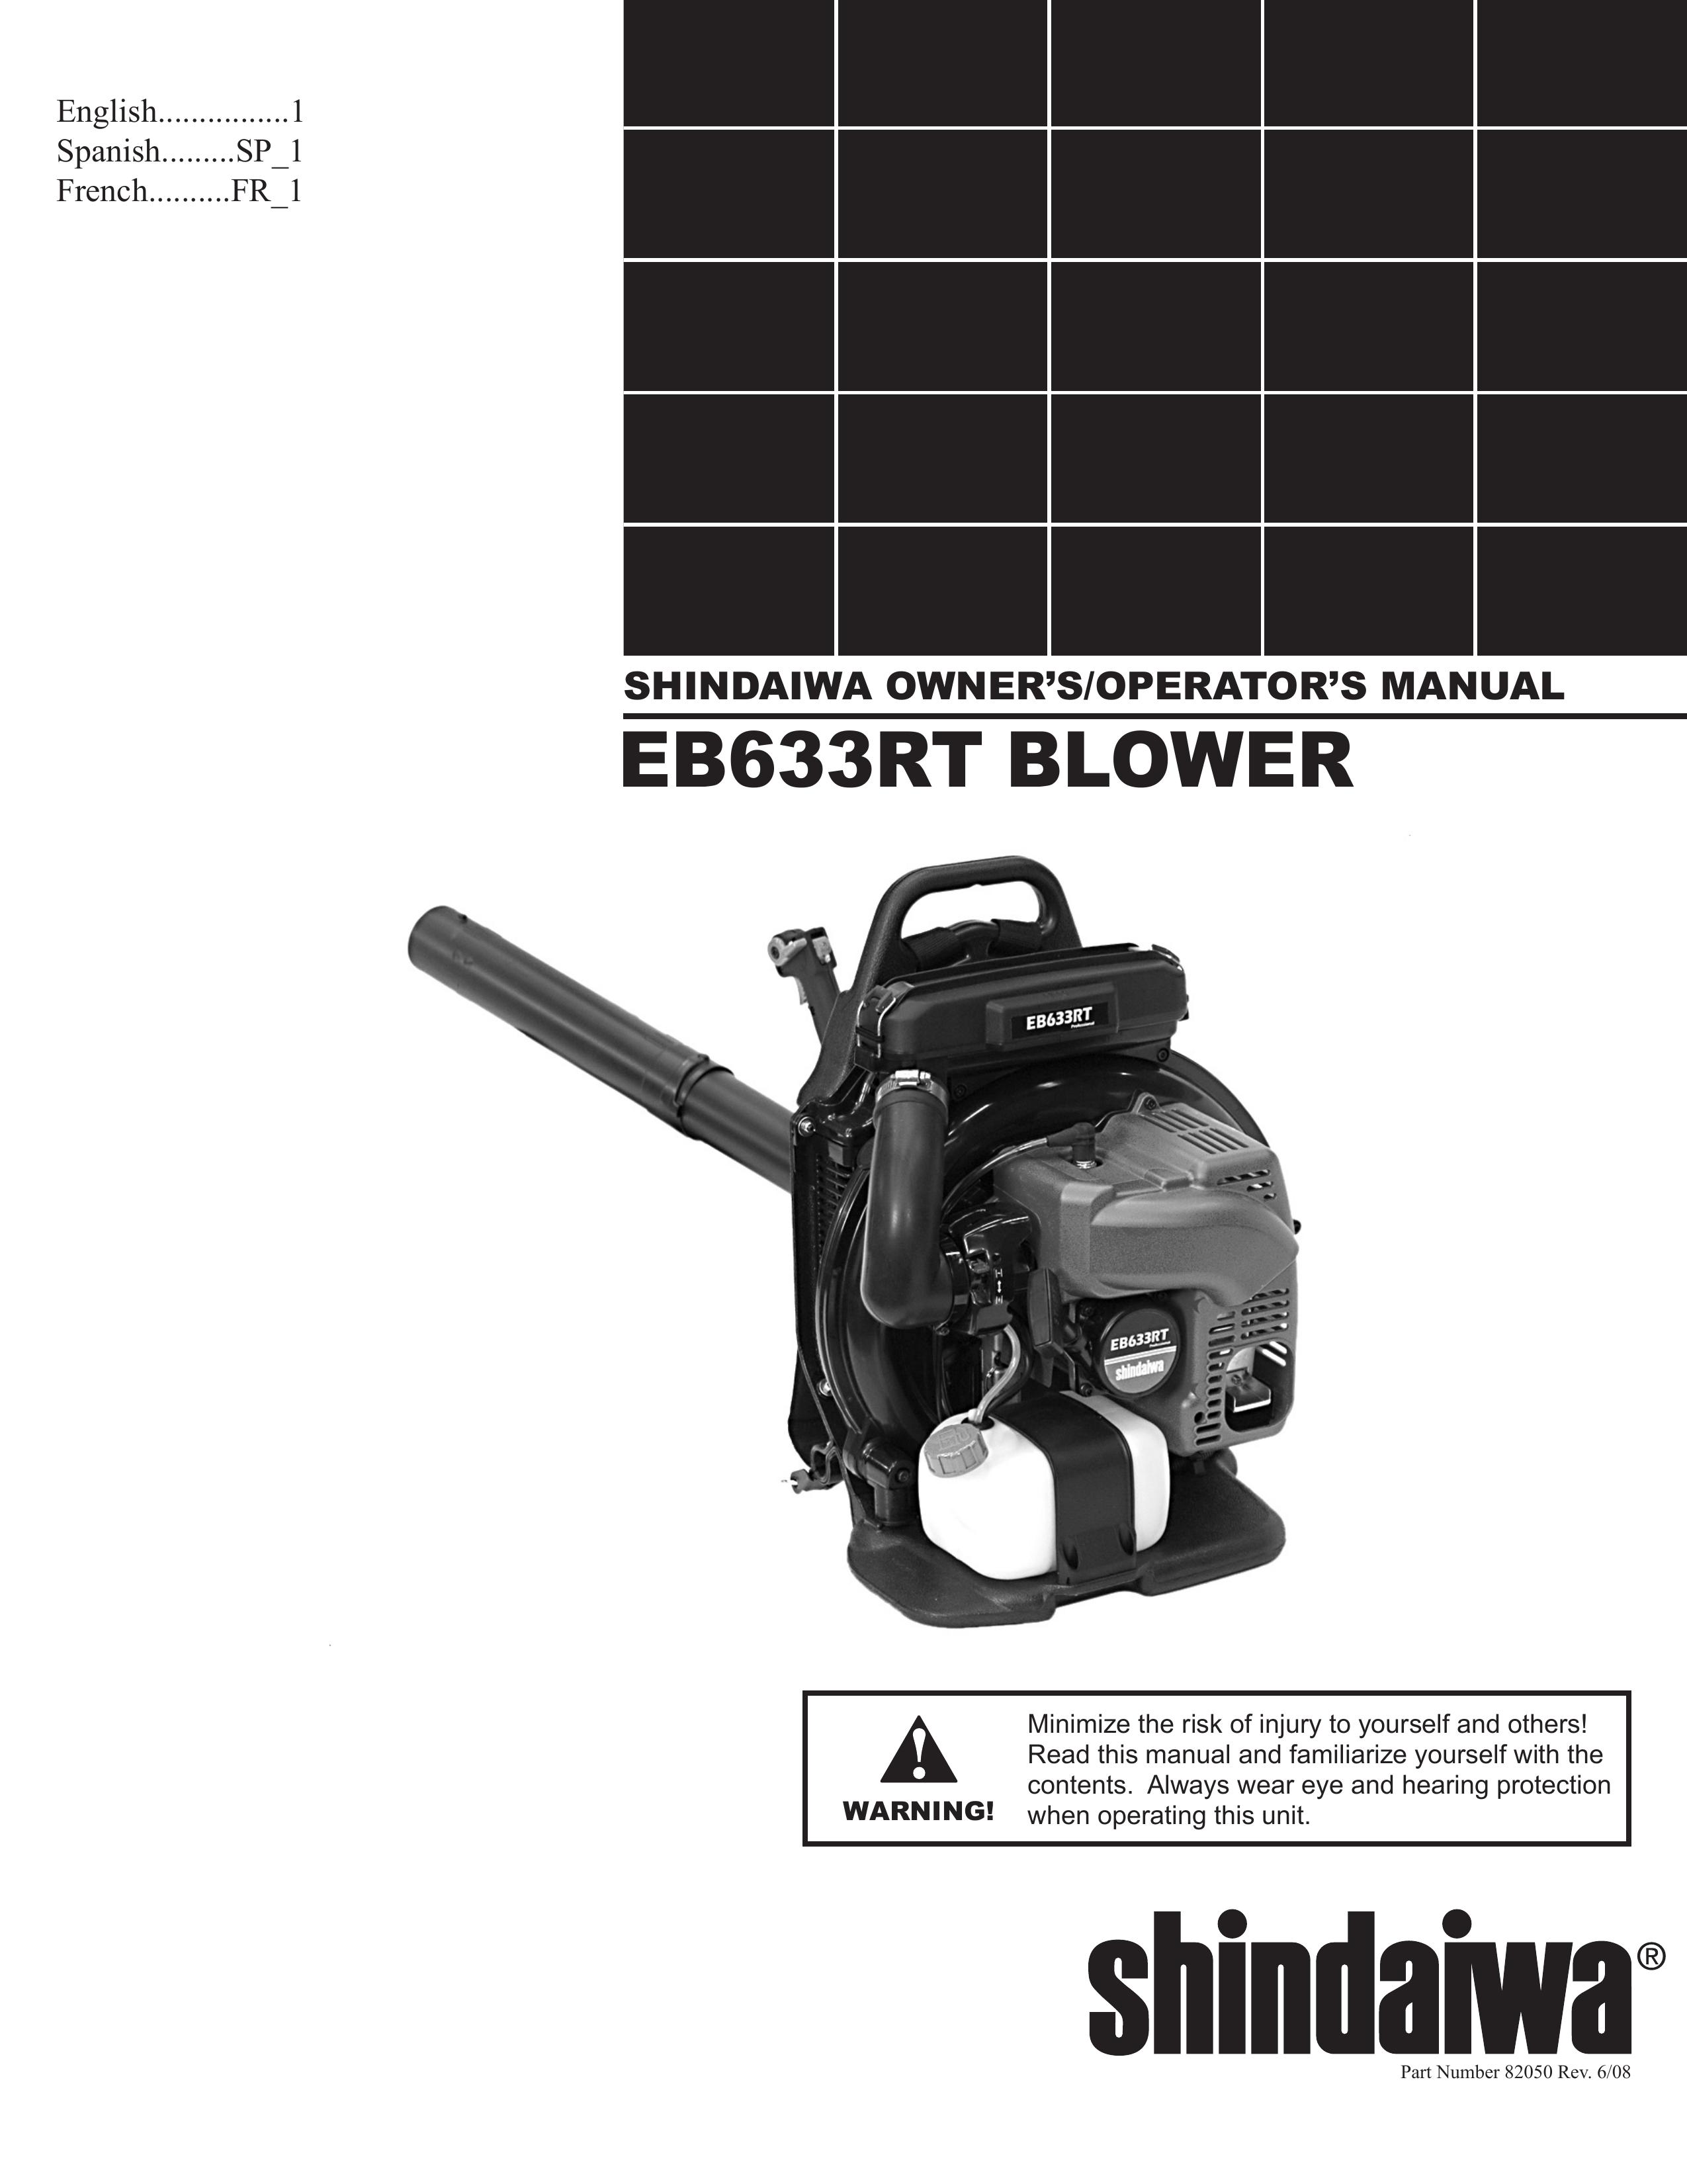 Shindaiwa EB633RT Blower User Manual